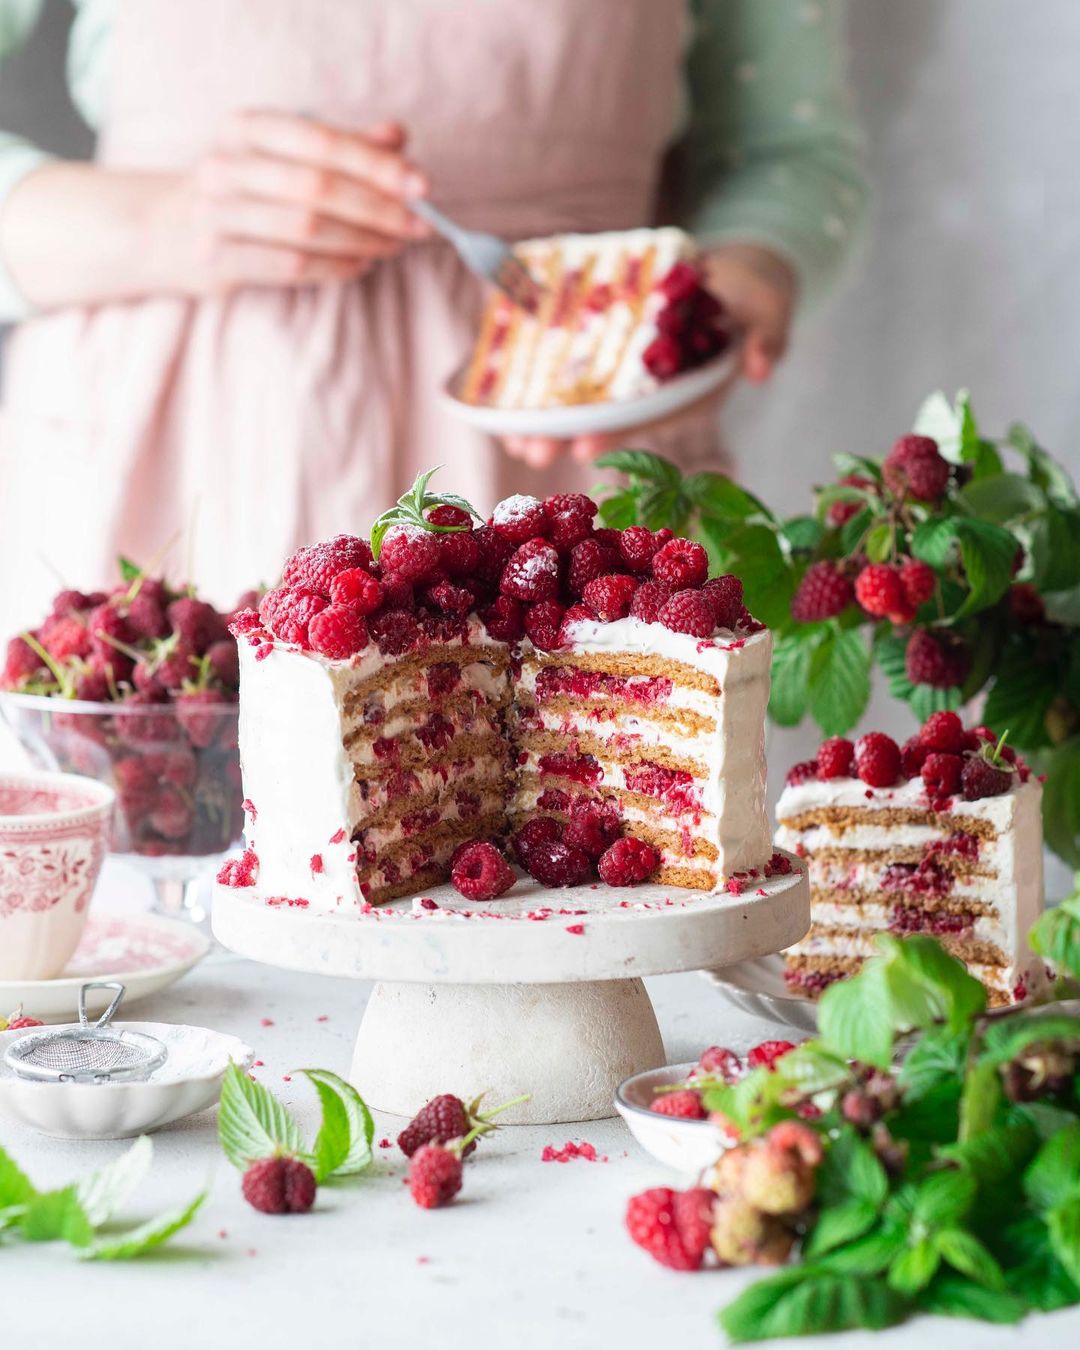 Honey cake with raspberries